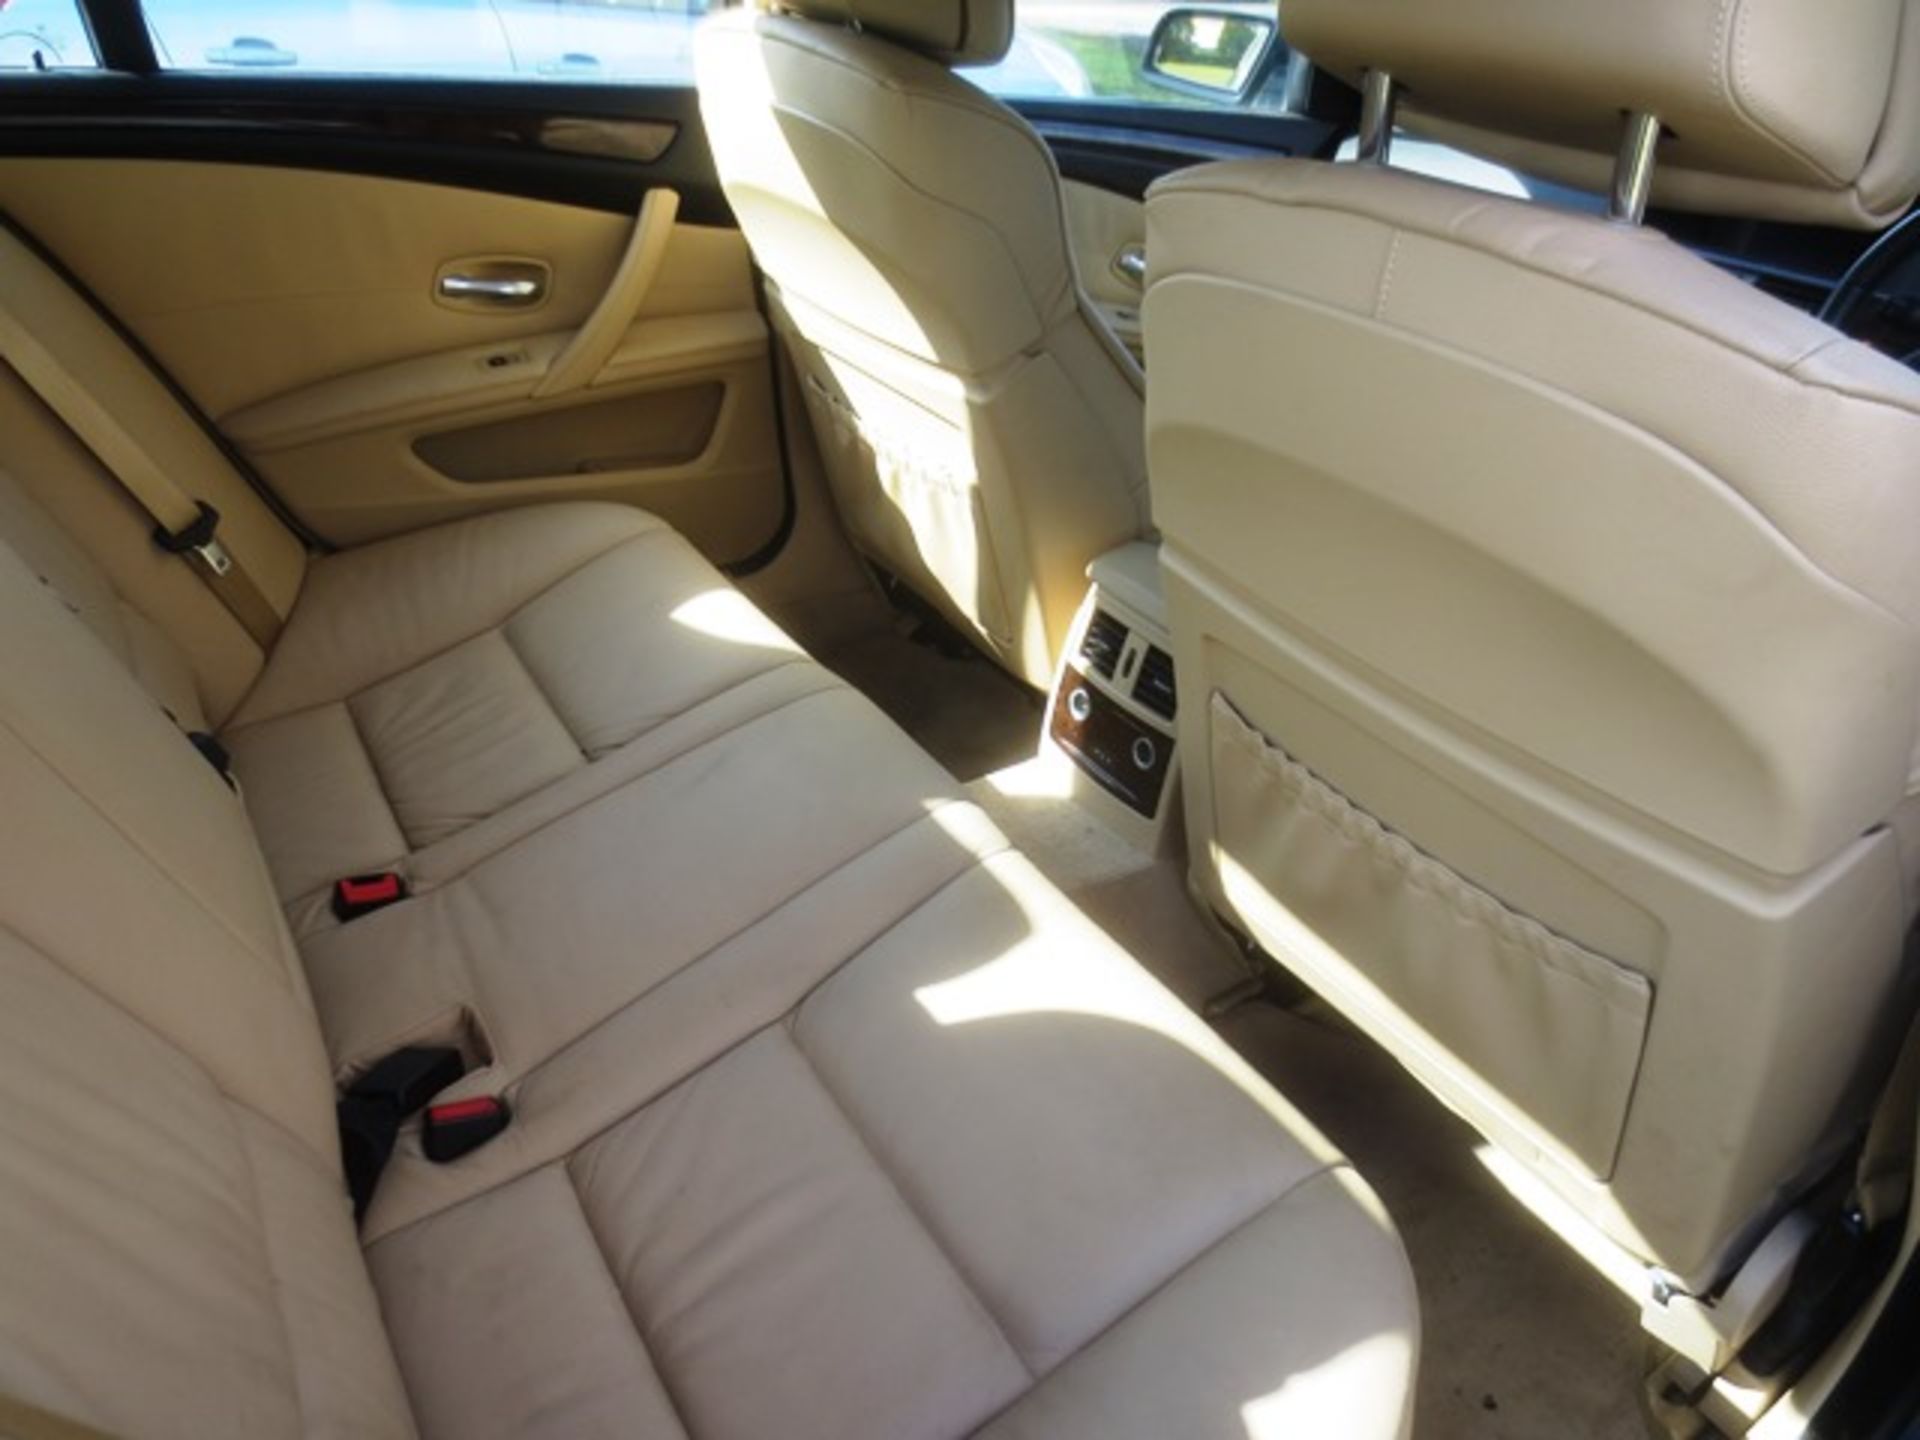 BMW 520D SE auto saloon 1995cc diesel, cream leather interior, reg no: WF57 RUV, mileage: 117,704, - Image 9 of 10